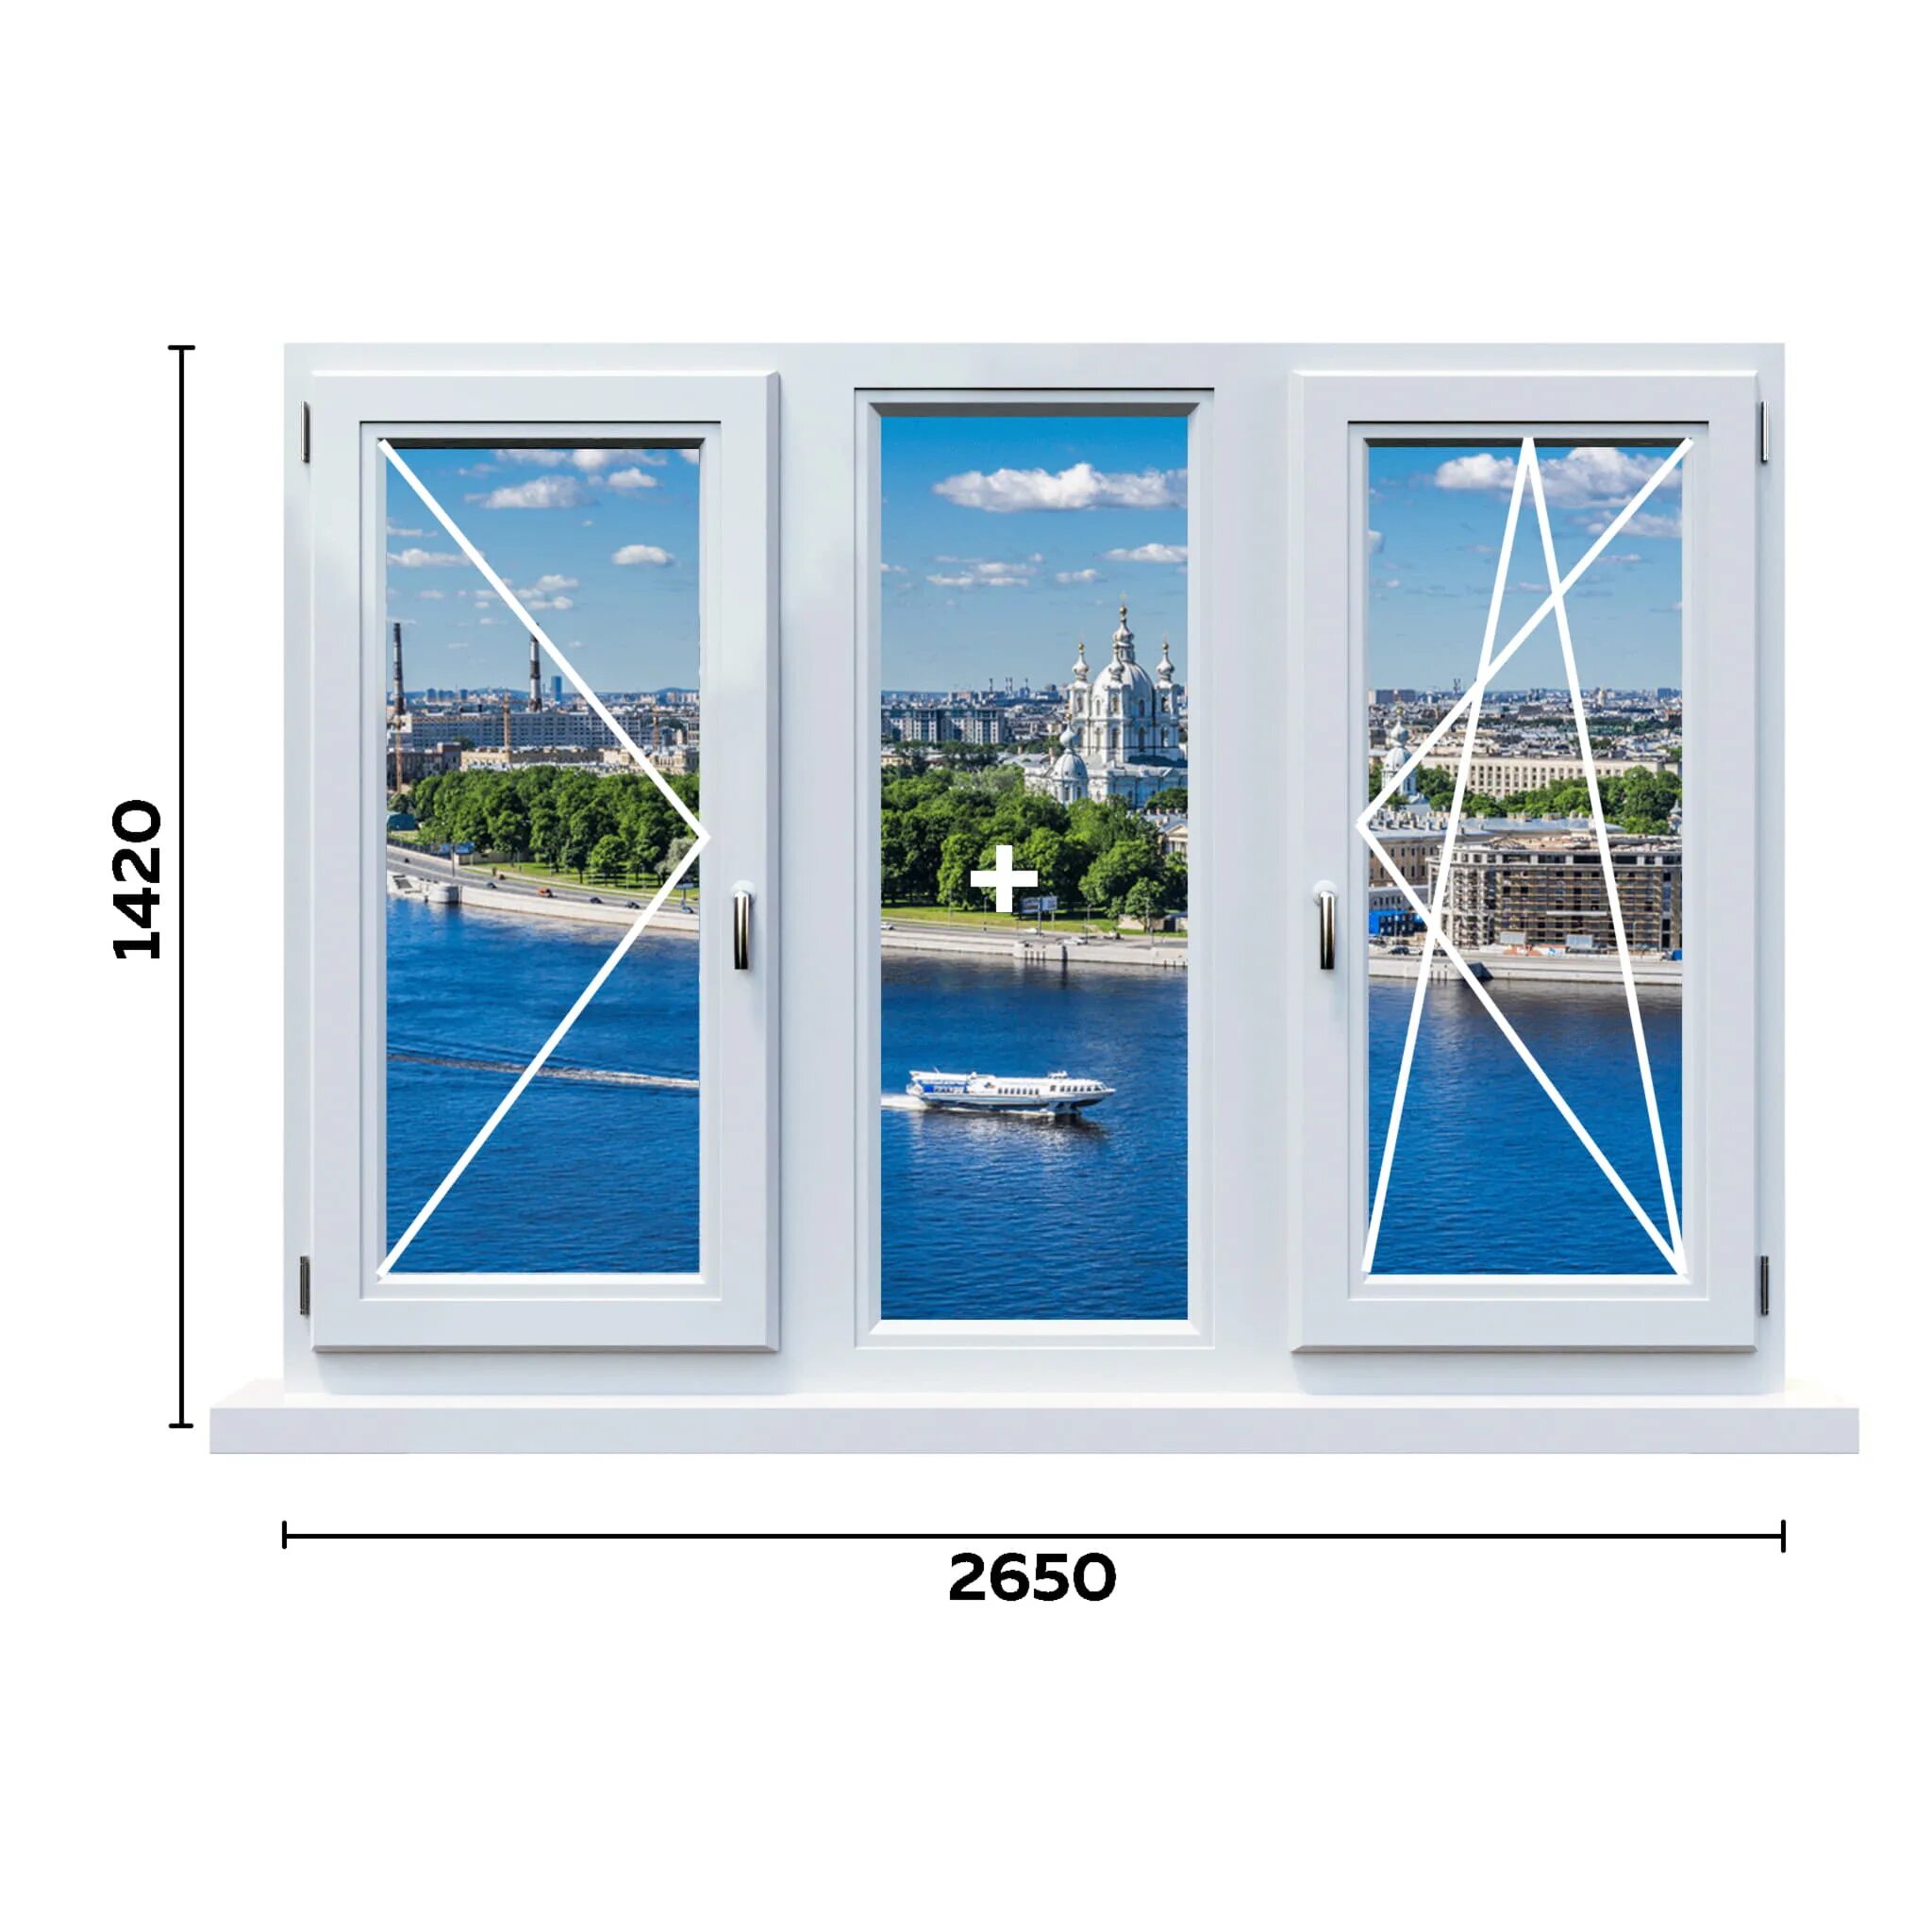 Заказать окна недорого от производителя. Окно 1700х1500 двустворчатое. Окна ПВХ одностворчатое 2000*2000.